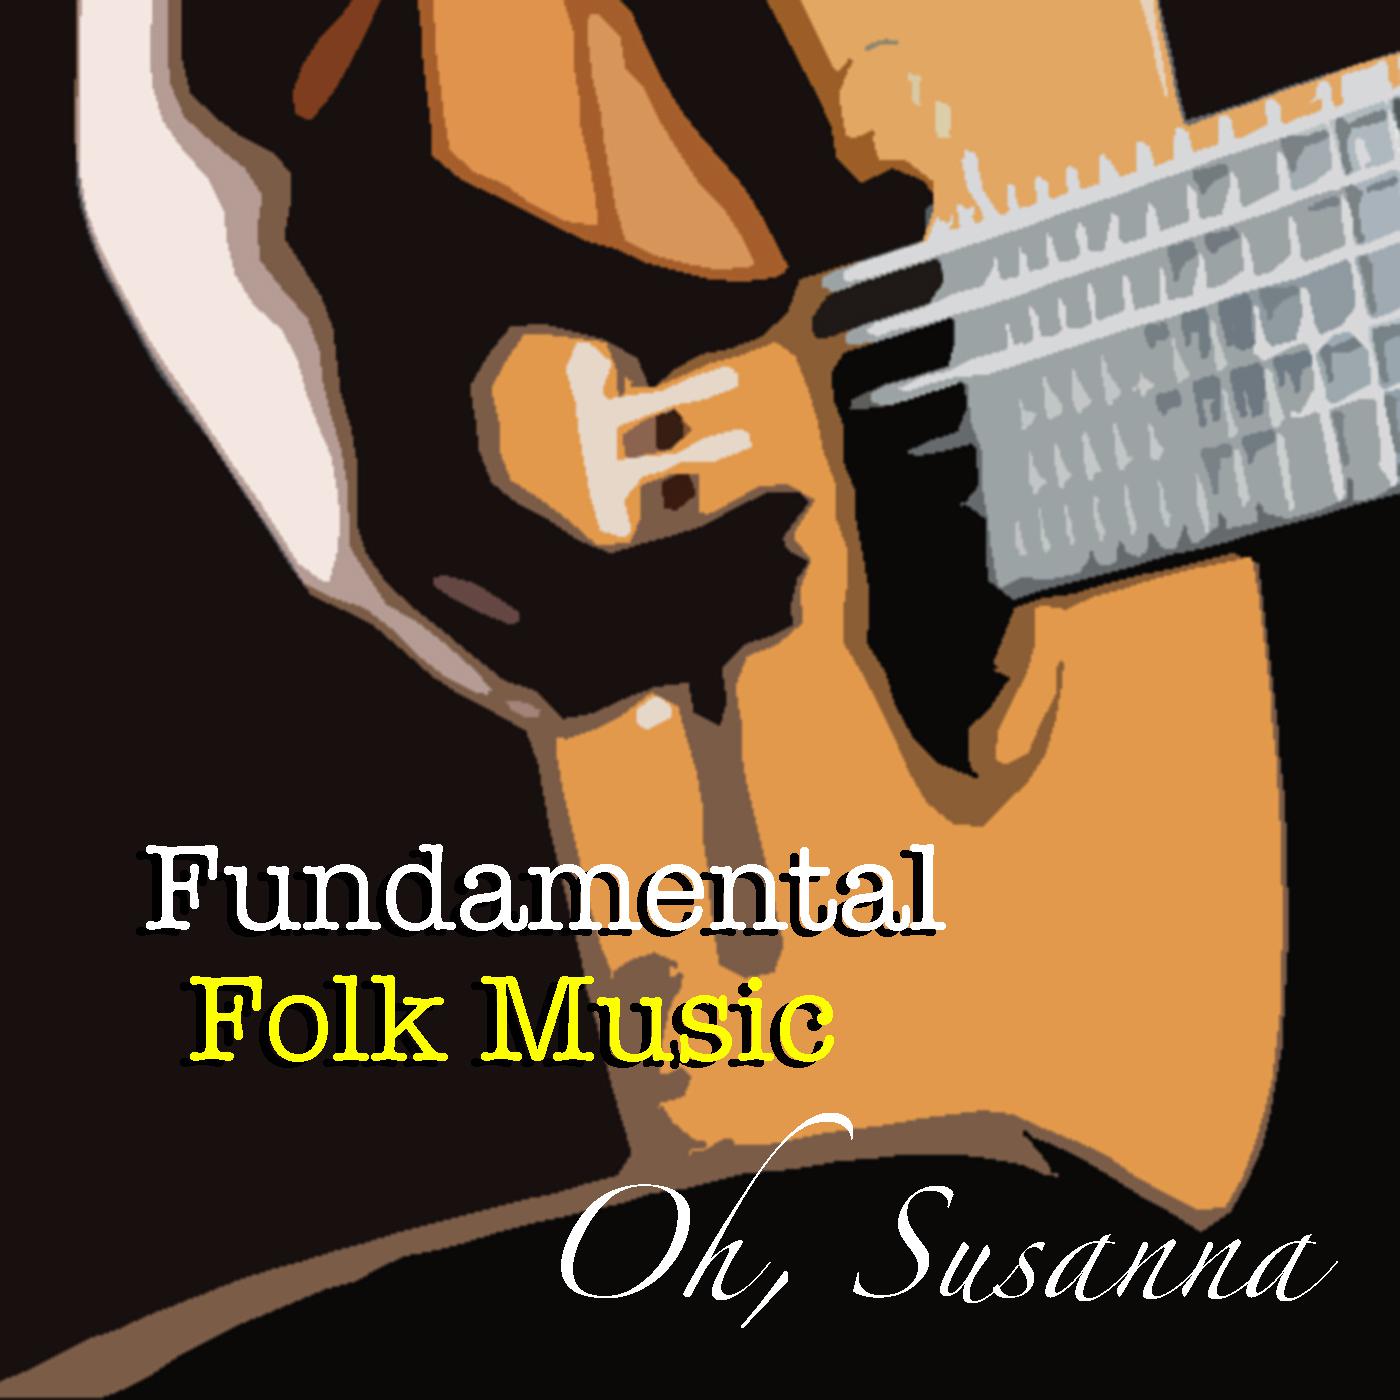 Oh, Susanna Fundamental Folk Music